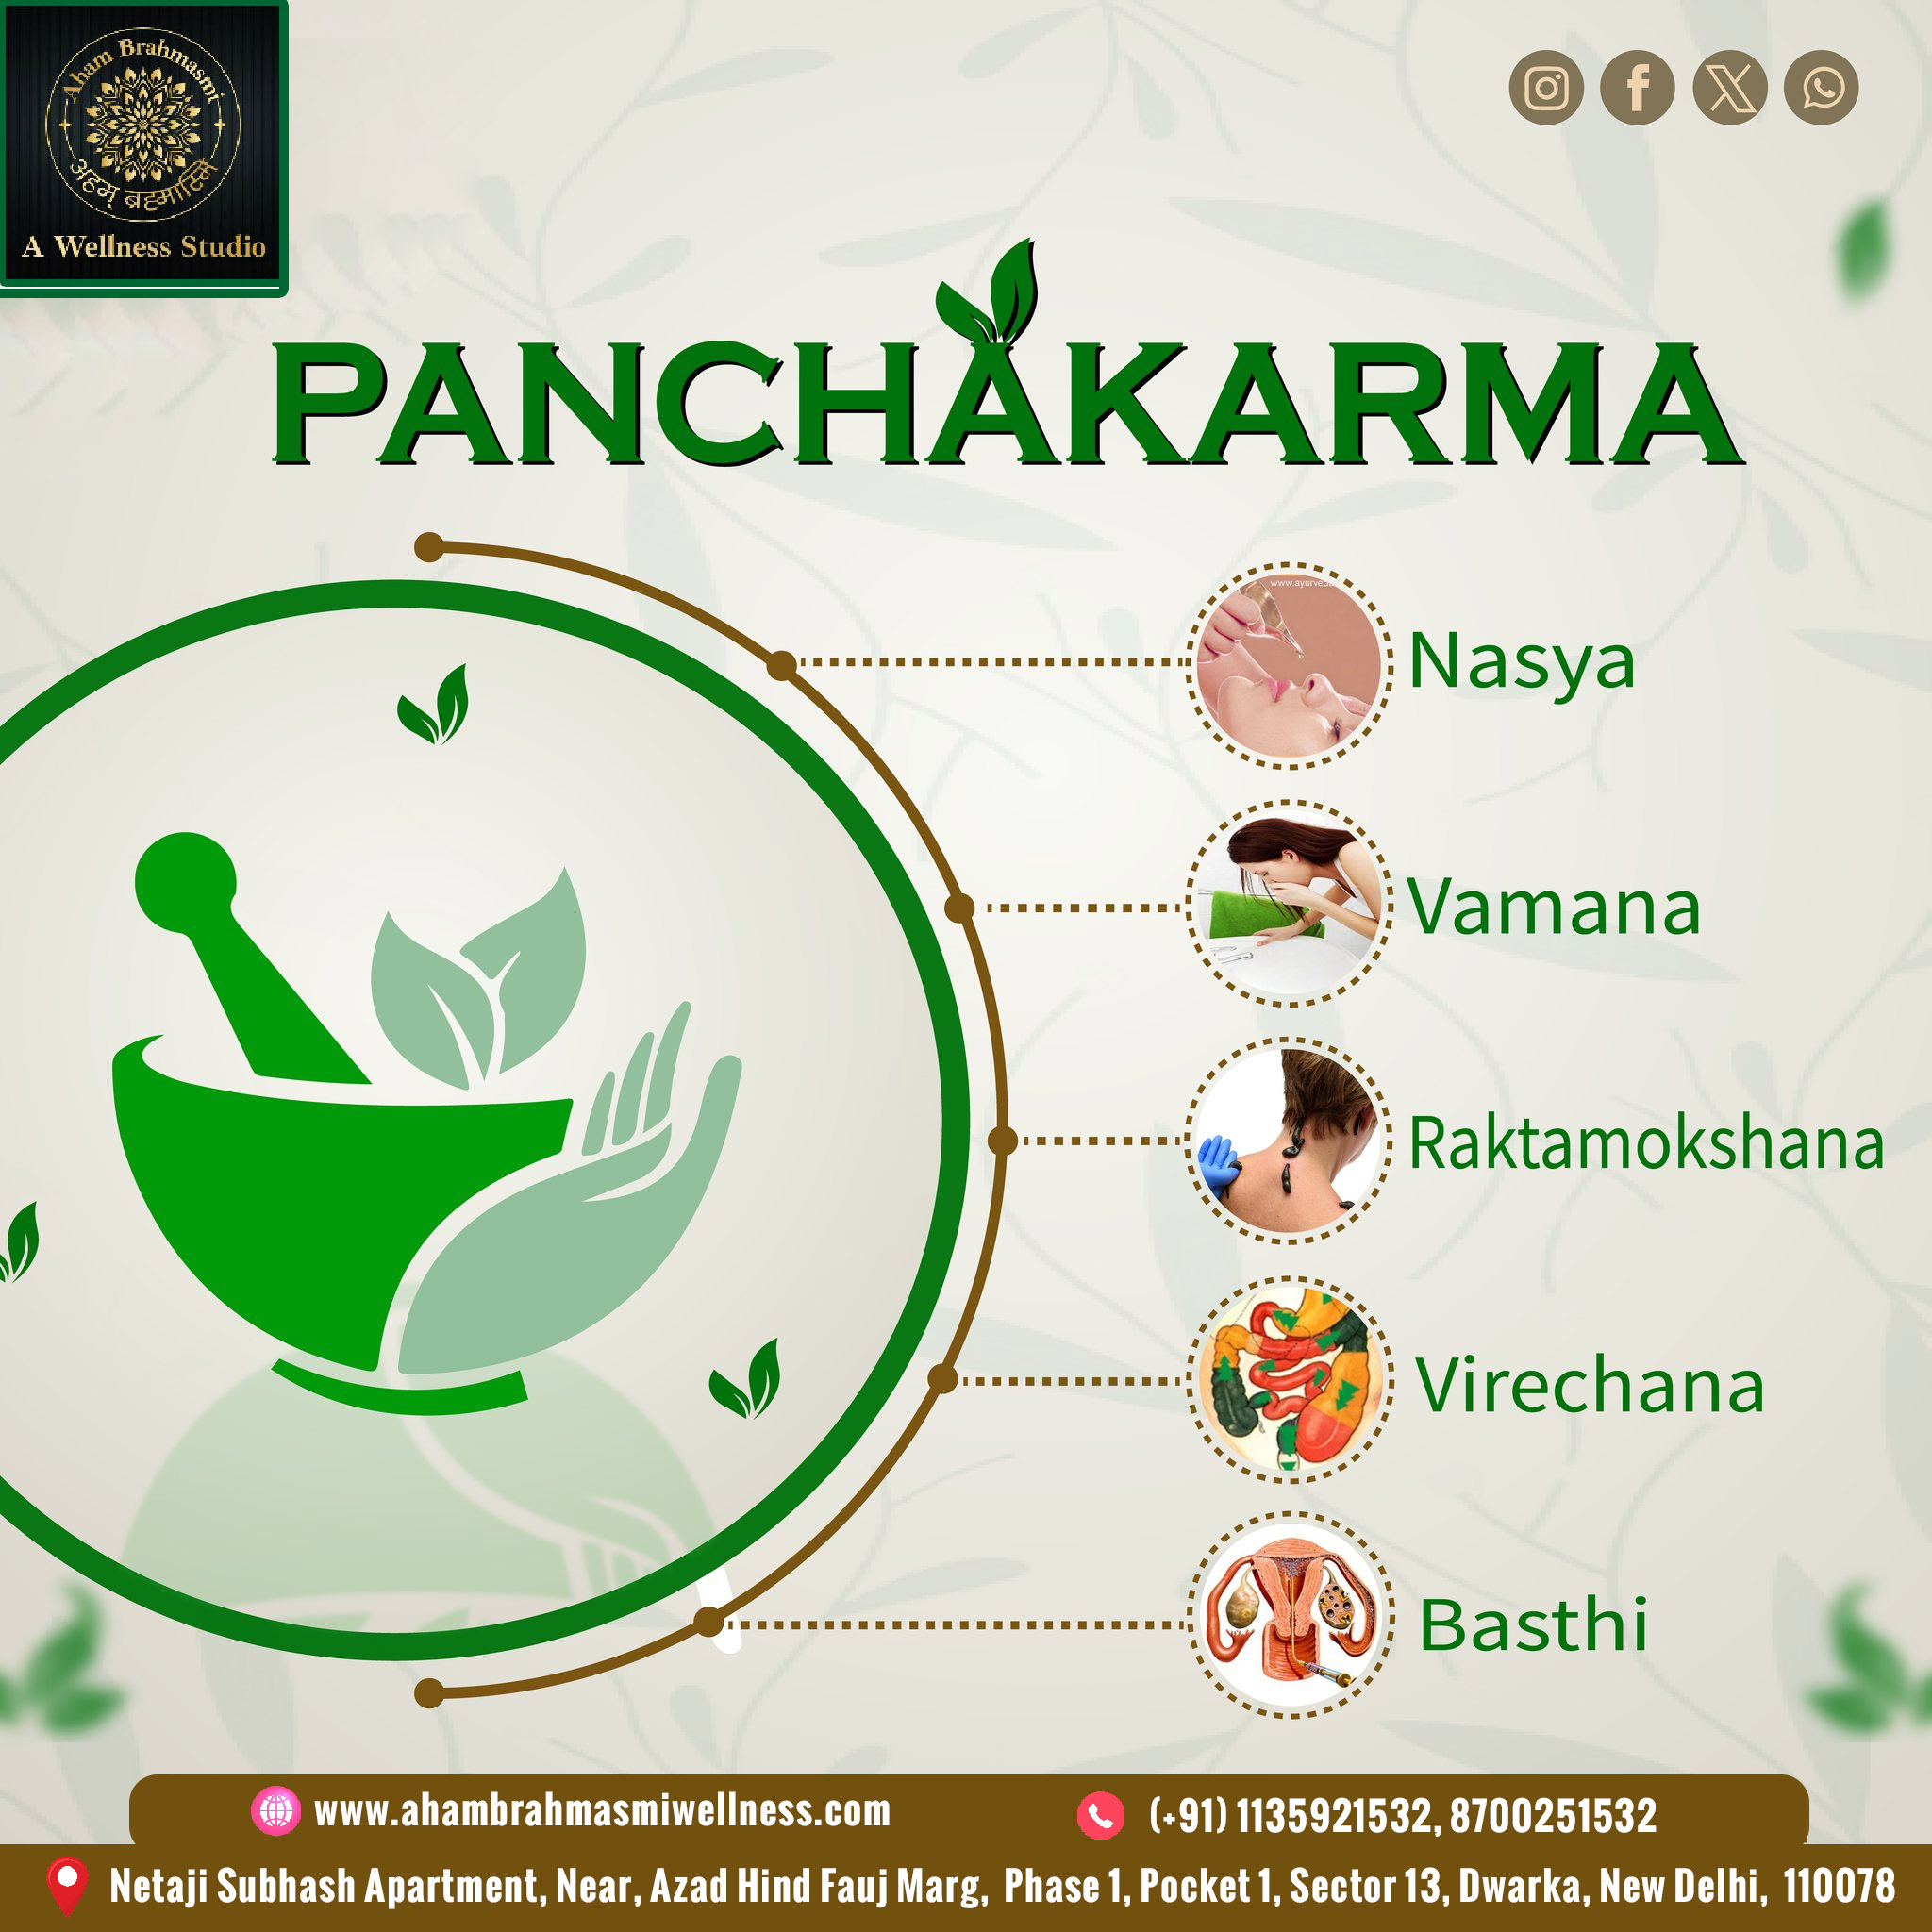 Panchakarma treatment offers a wide range of benefits